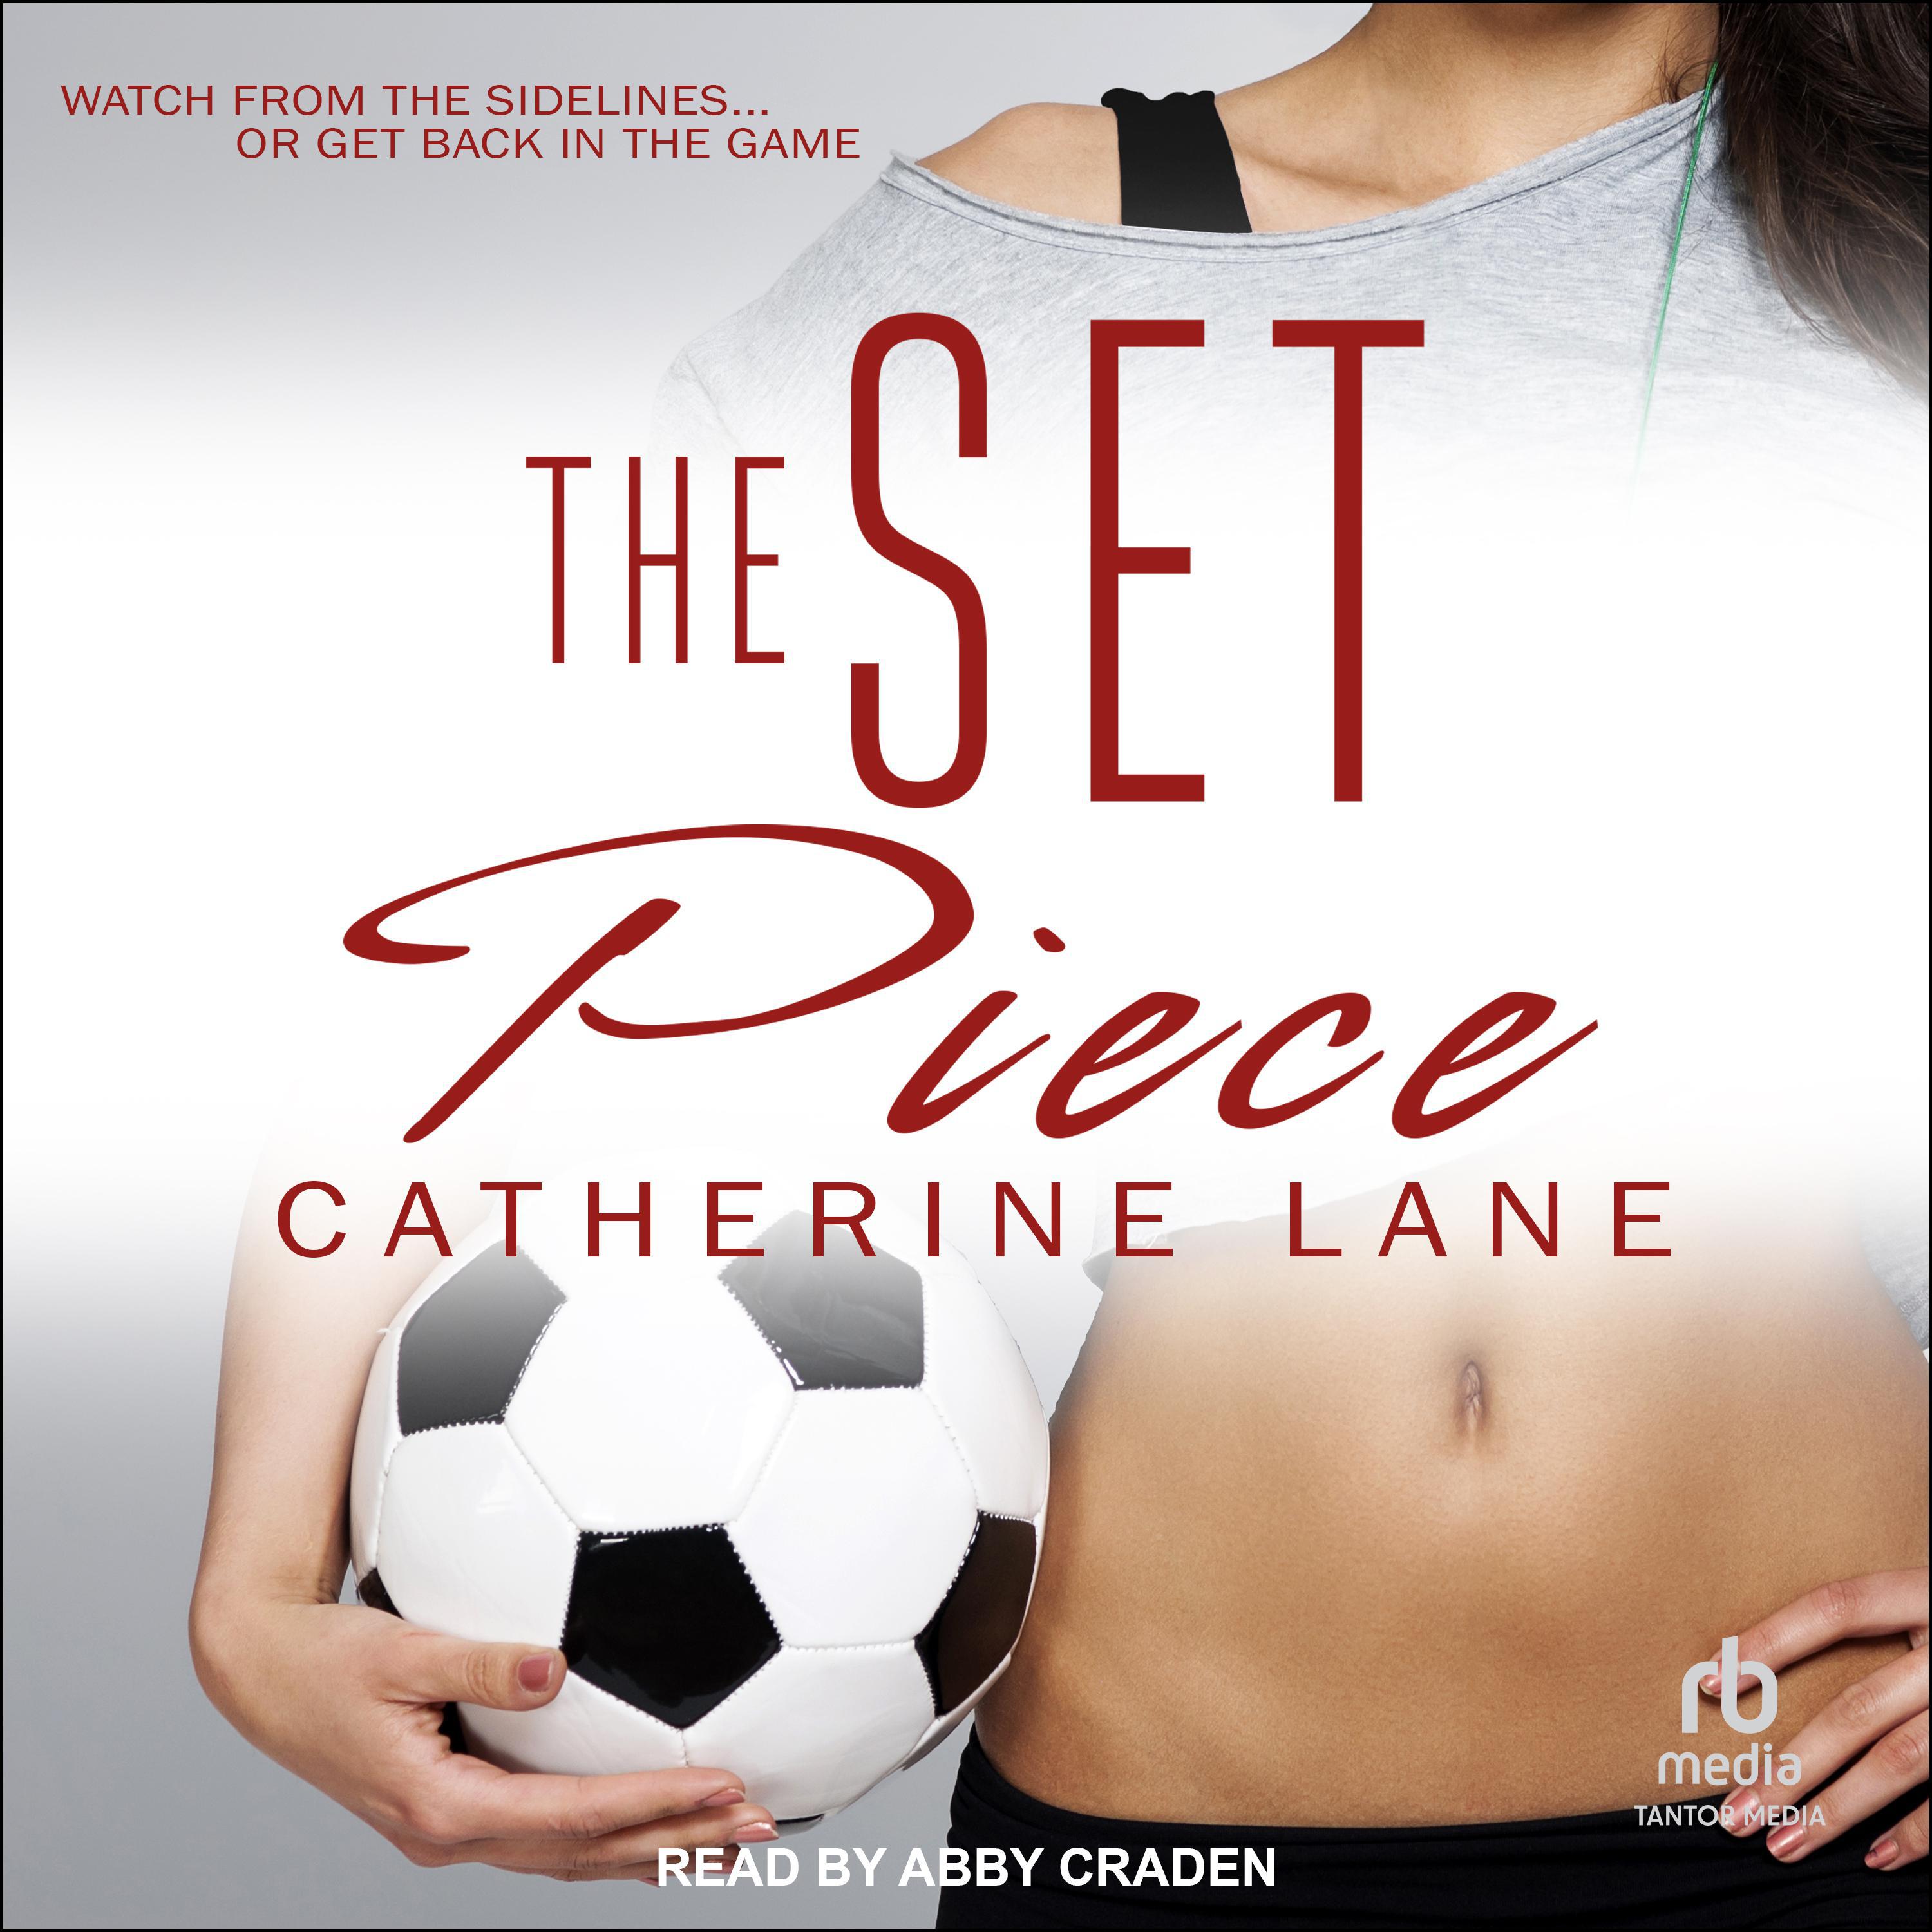 Abby Craden, Catherine Lane: The Set Piece (AudiobookFormat, english language, 2022, Tantor Audio)